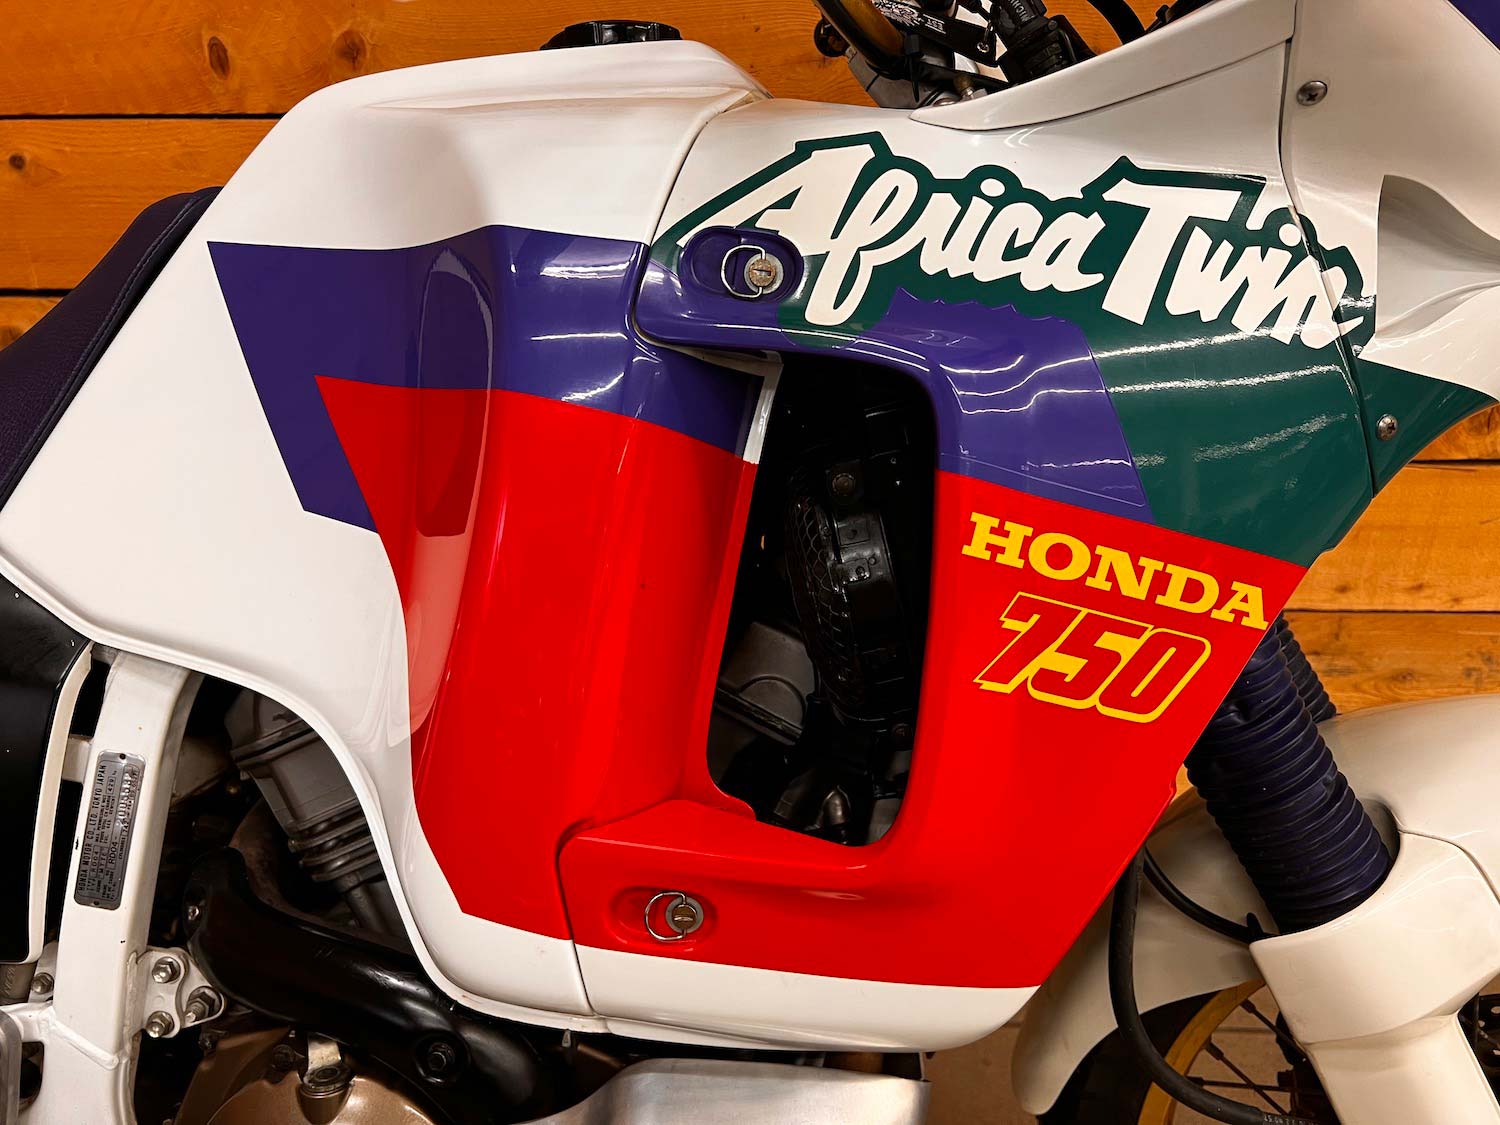 Honda_at_xrv750_cezanne_classic_Motorcycle_5-160.jpg